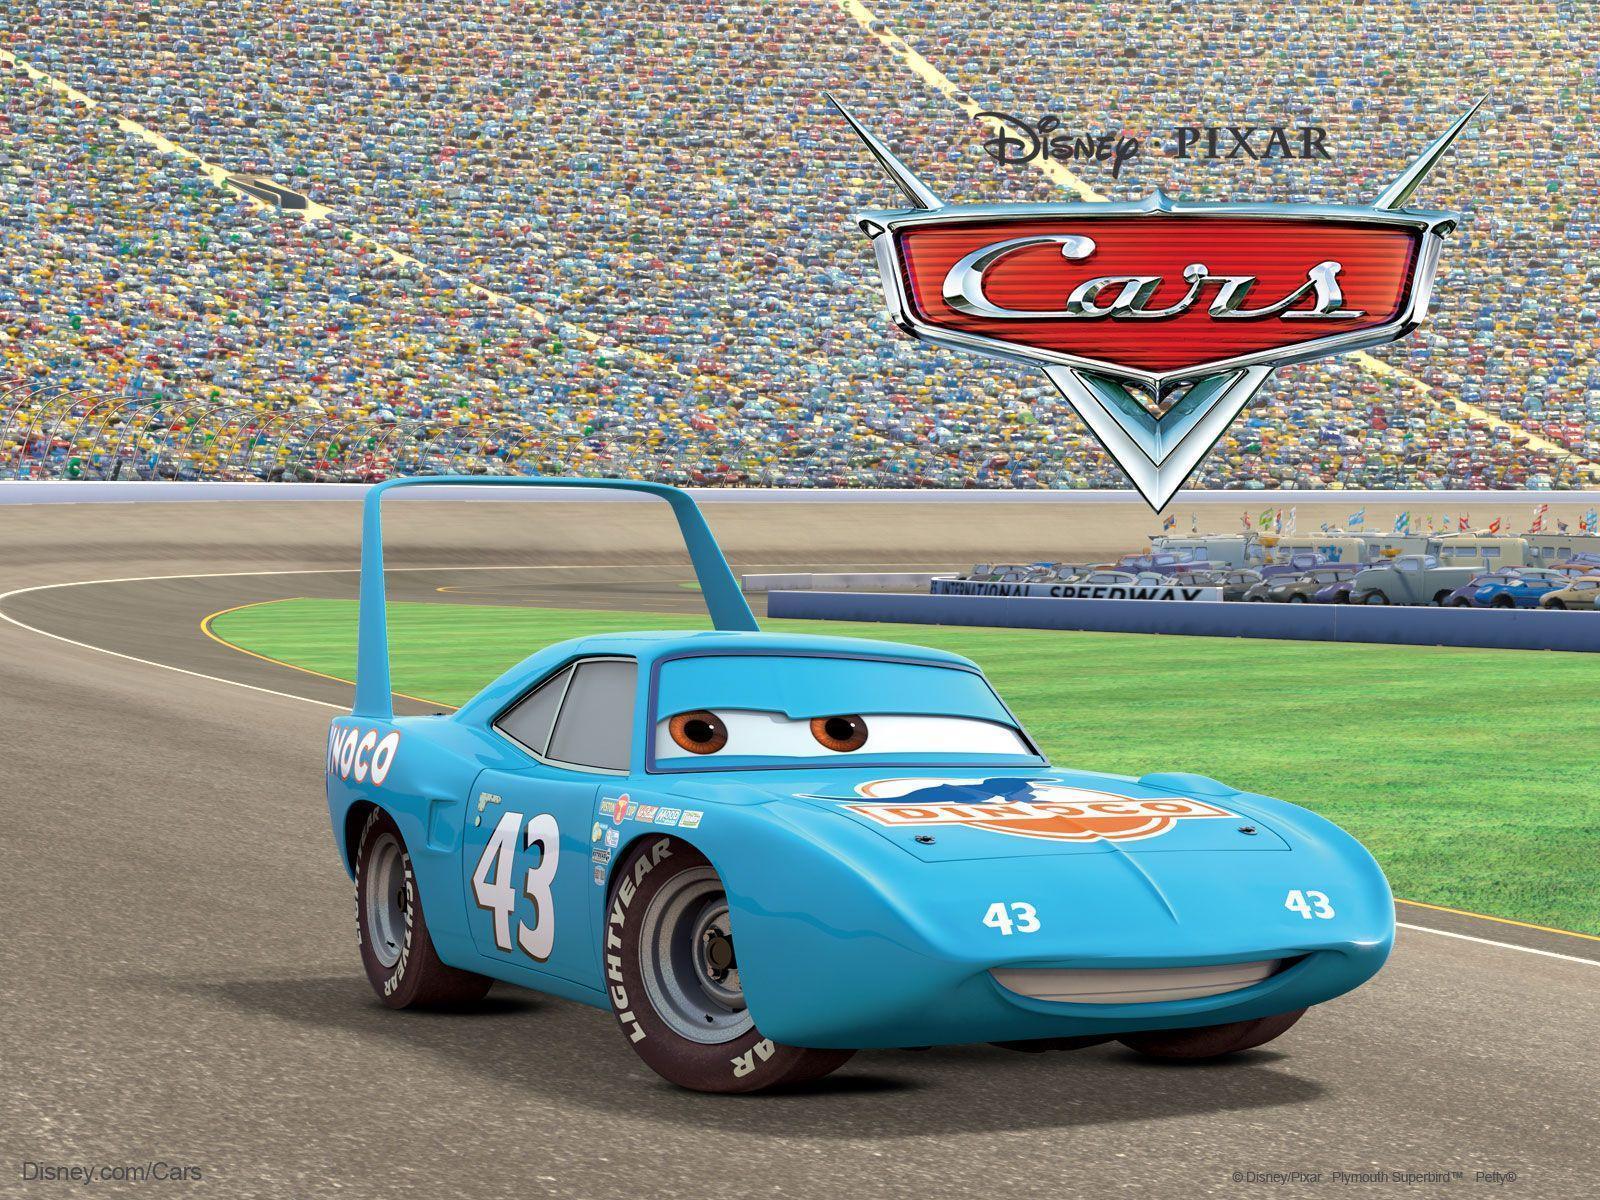 King the Race Car from Pixar's Cars Movie Desktop Wallpaper